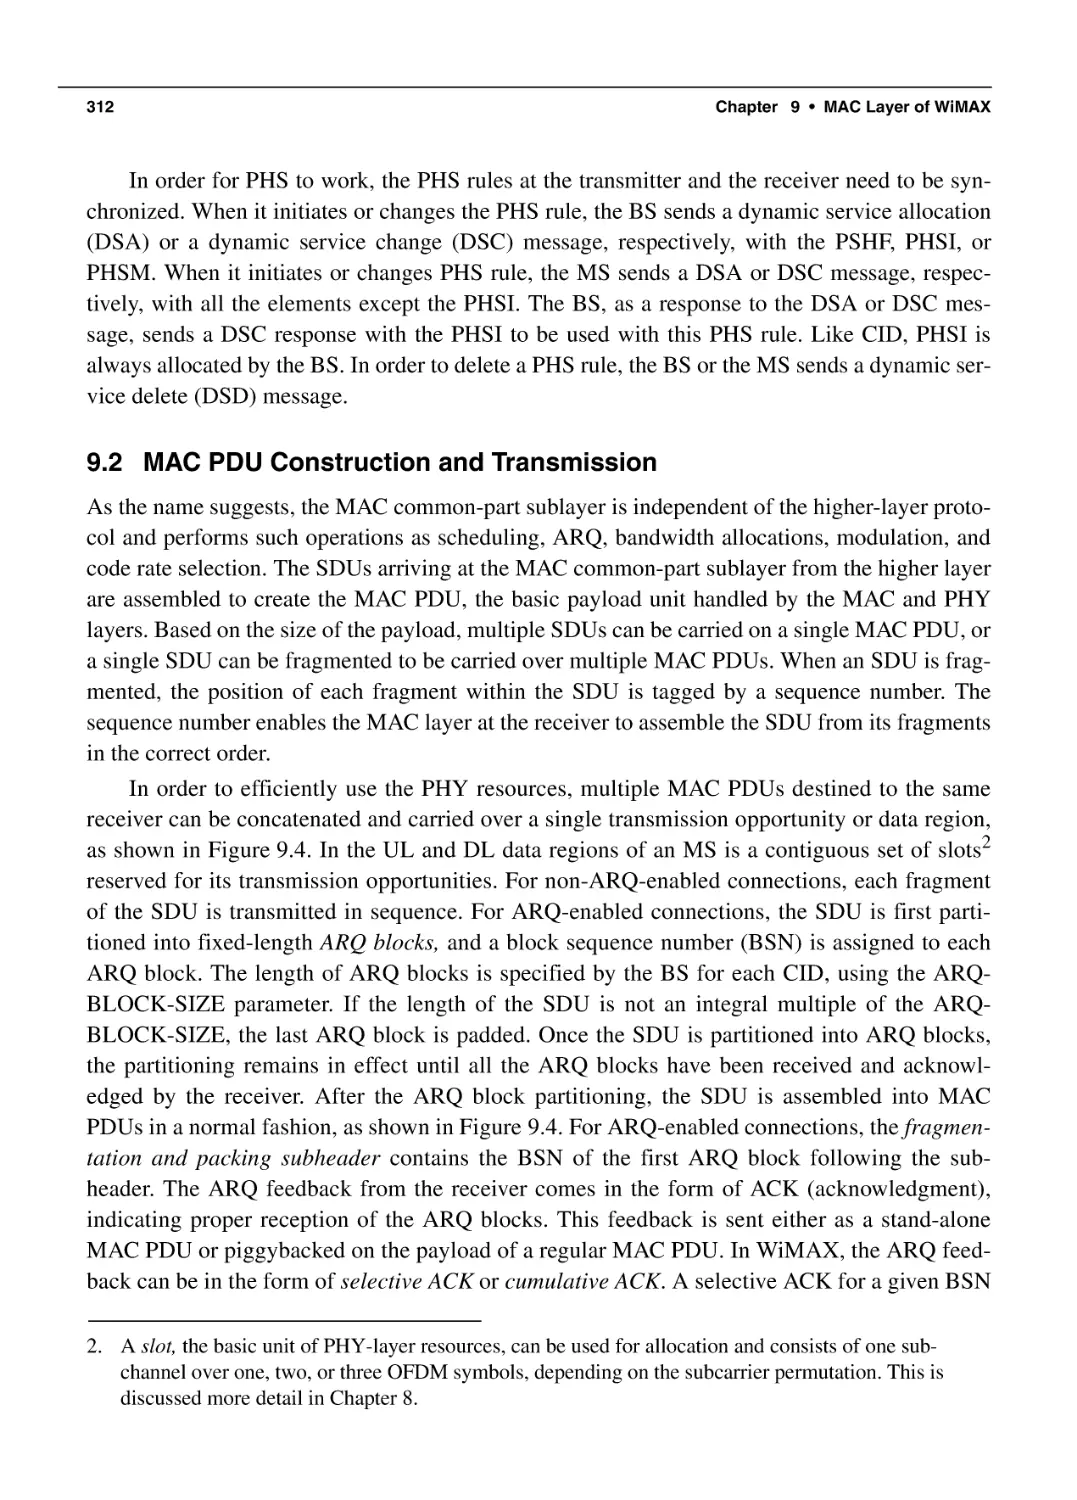 9.2 MAC PDU Construction and Transmission